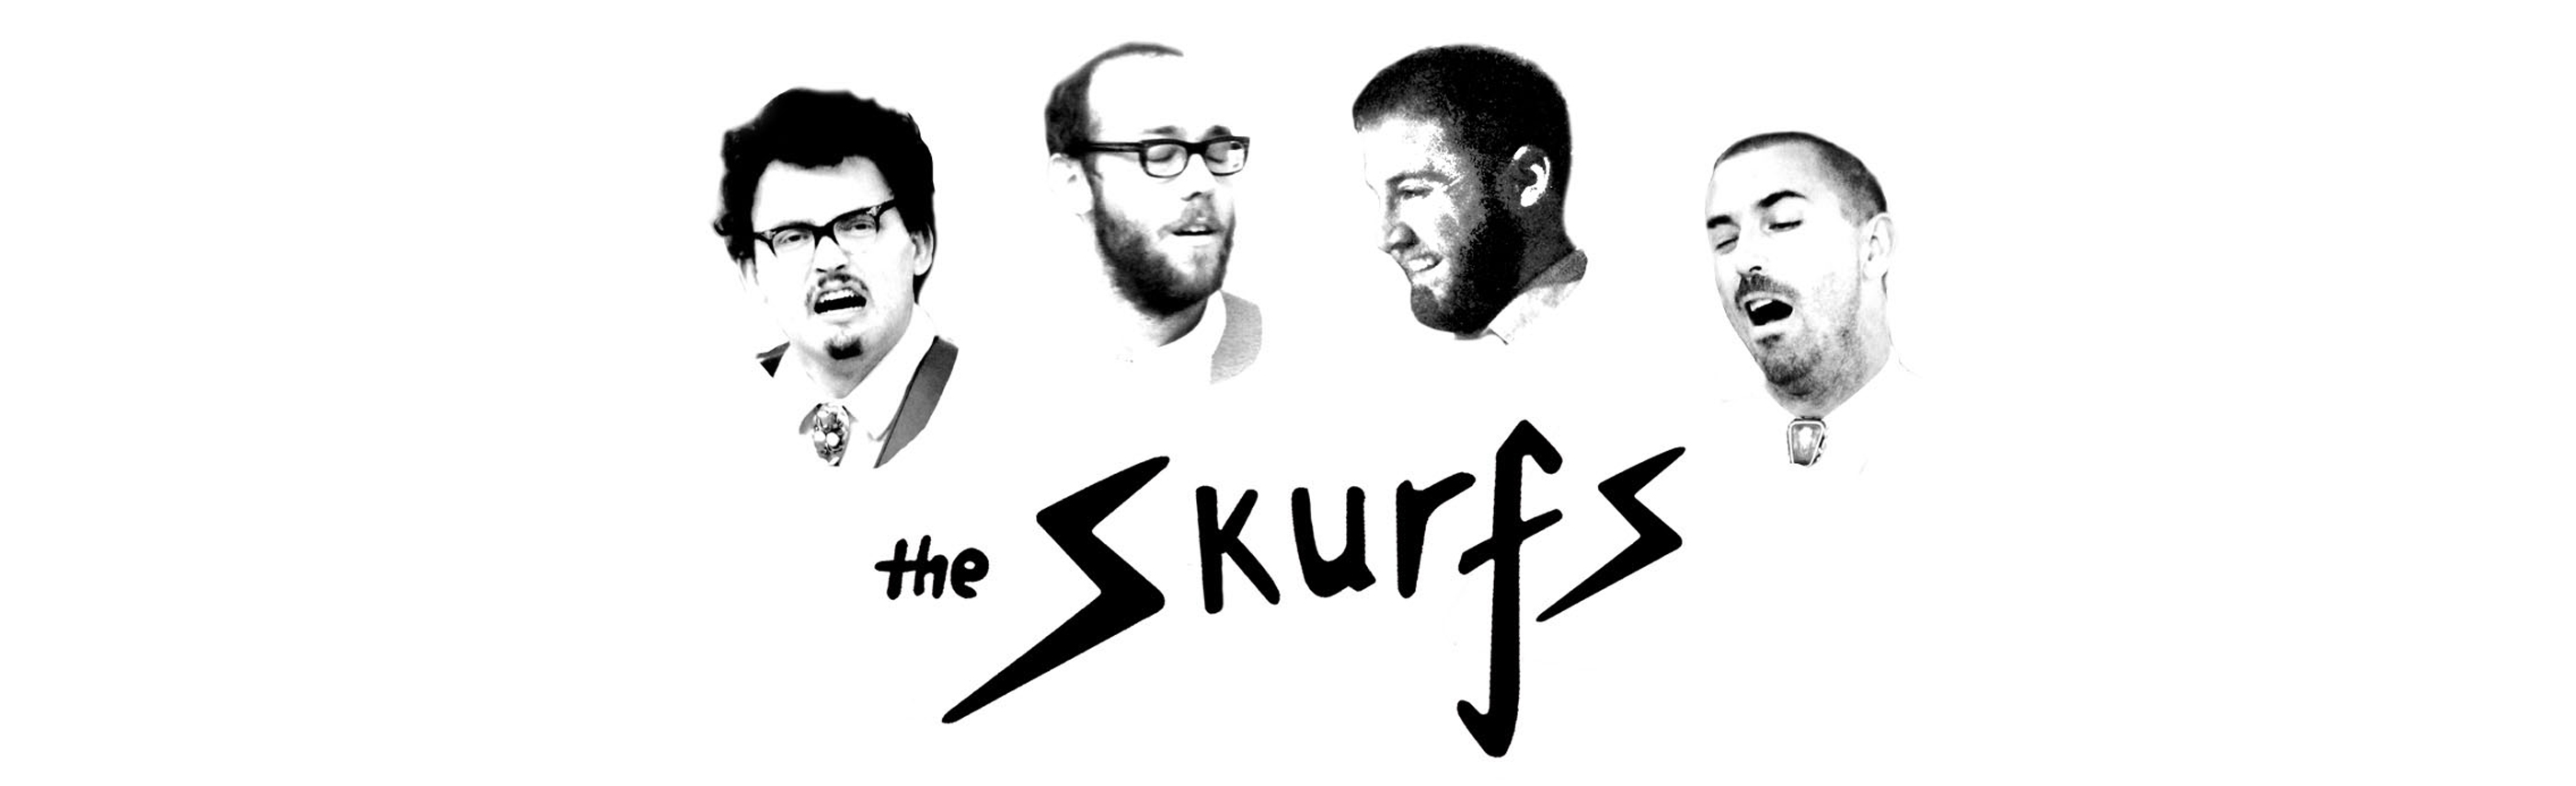 The Skurfs